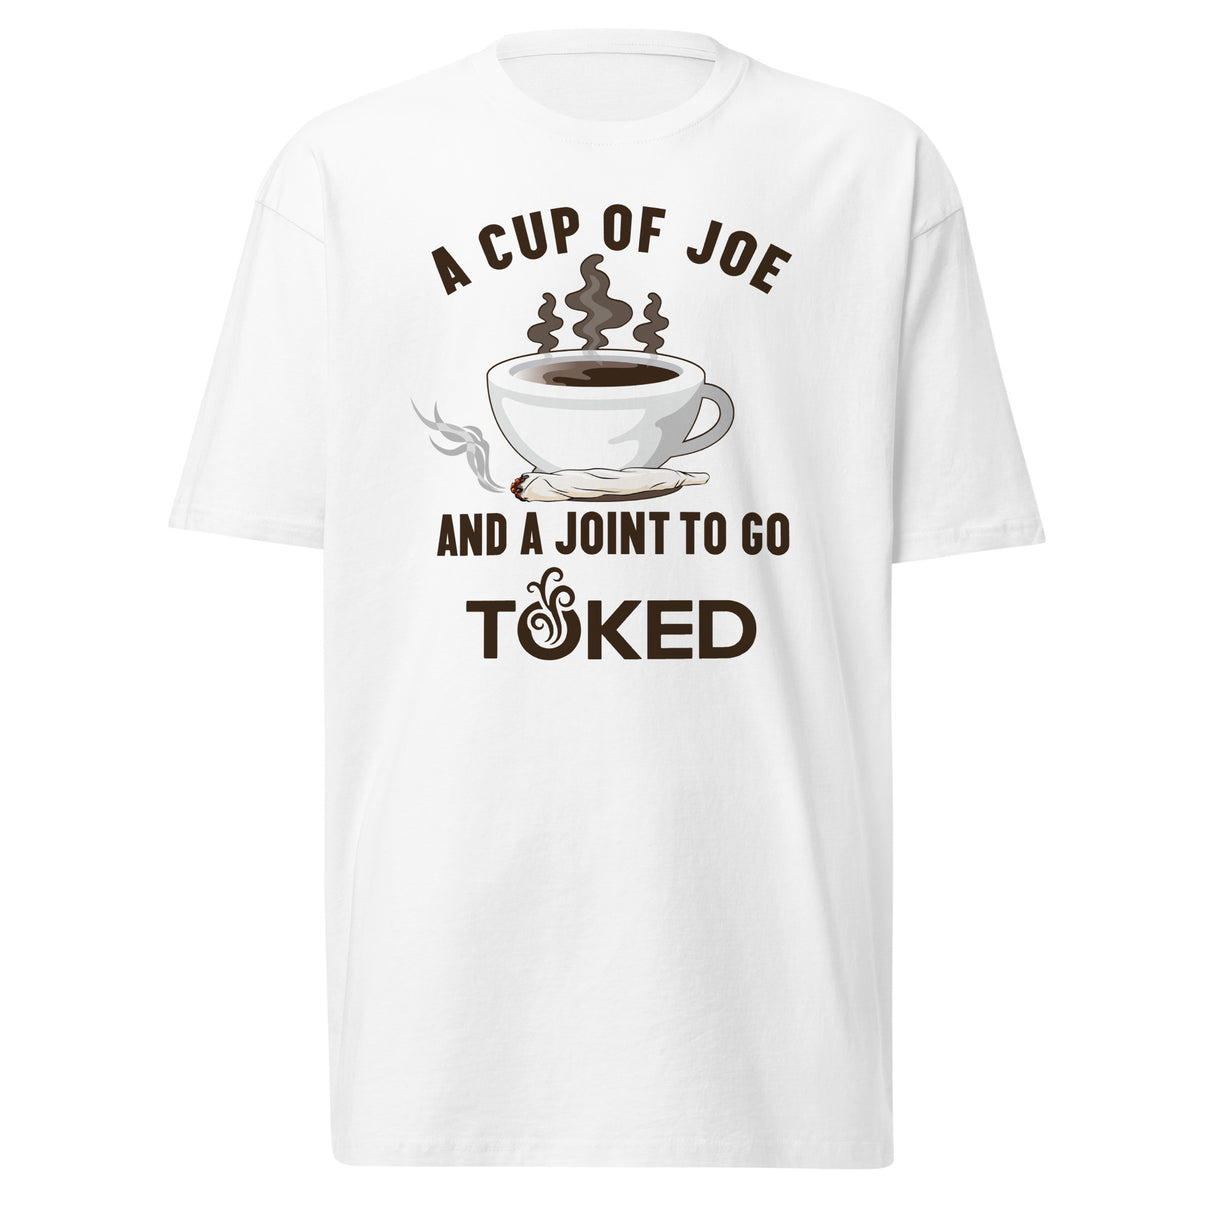 A Cup of Joe T-Shirt